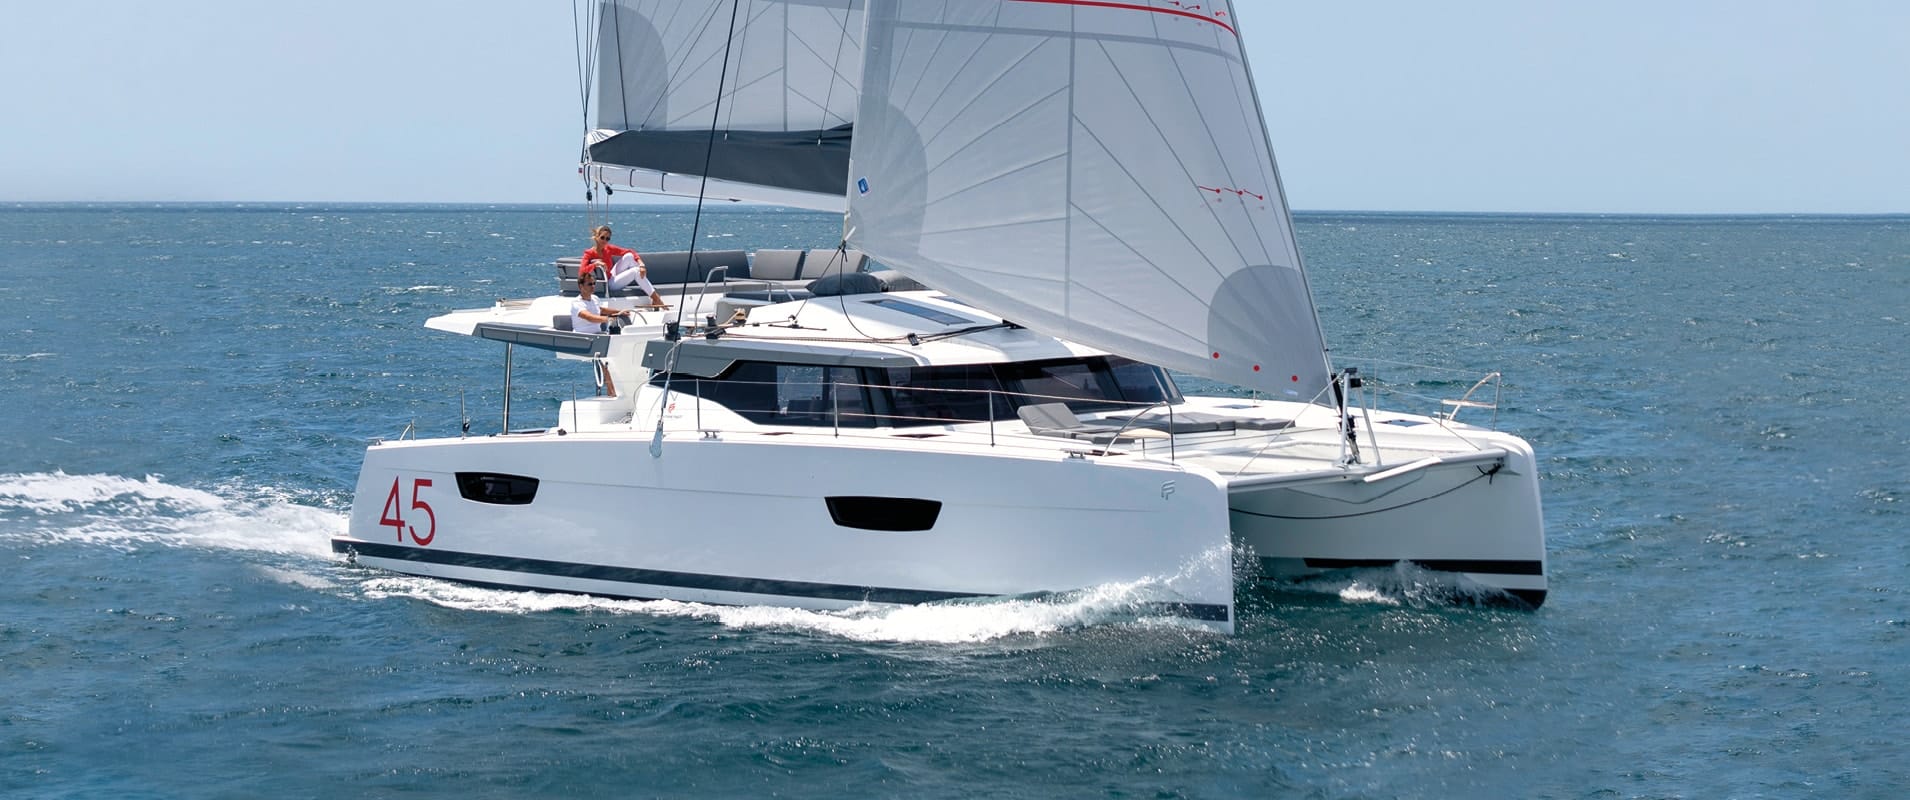 elba-45-cruising-catamarans-fountaine-pajot-sailing-catamarans-1b- مين